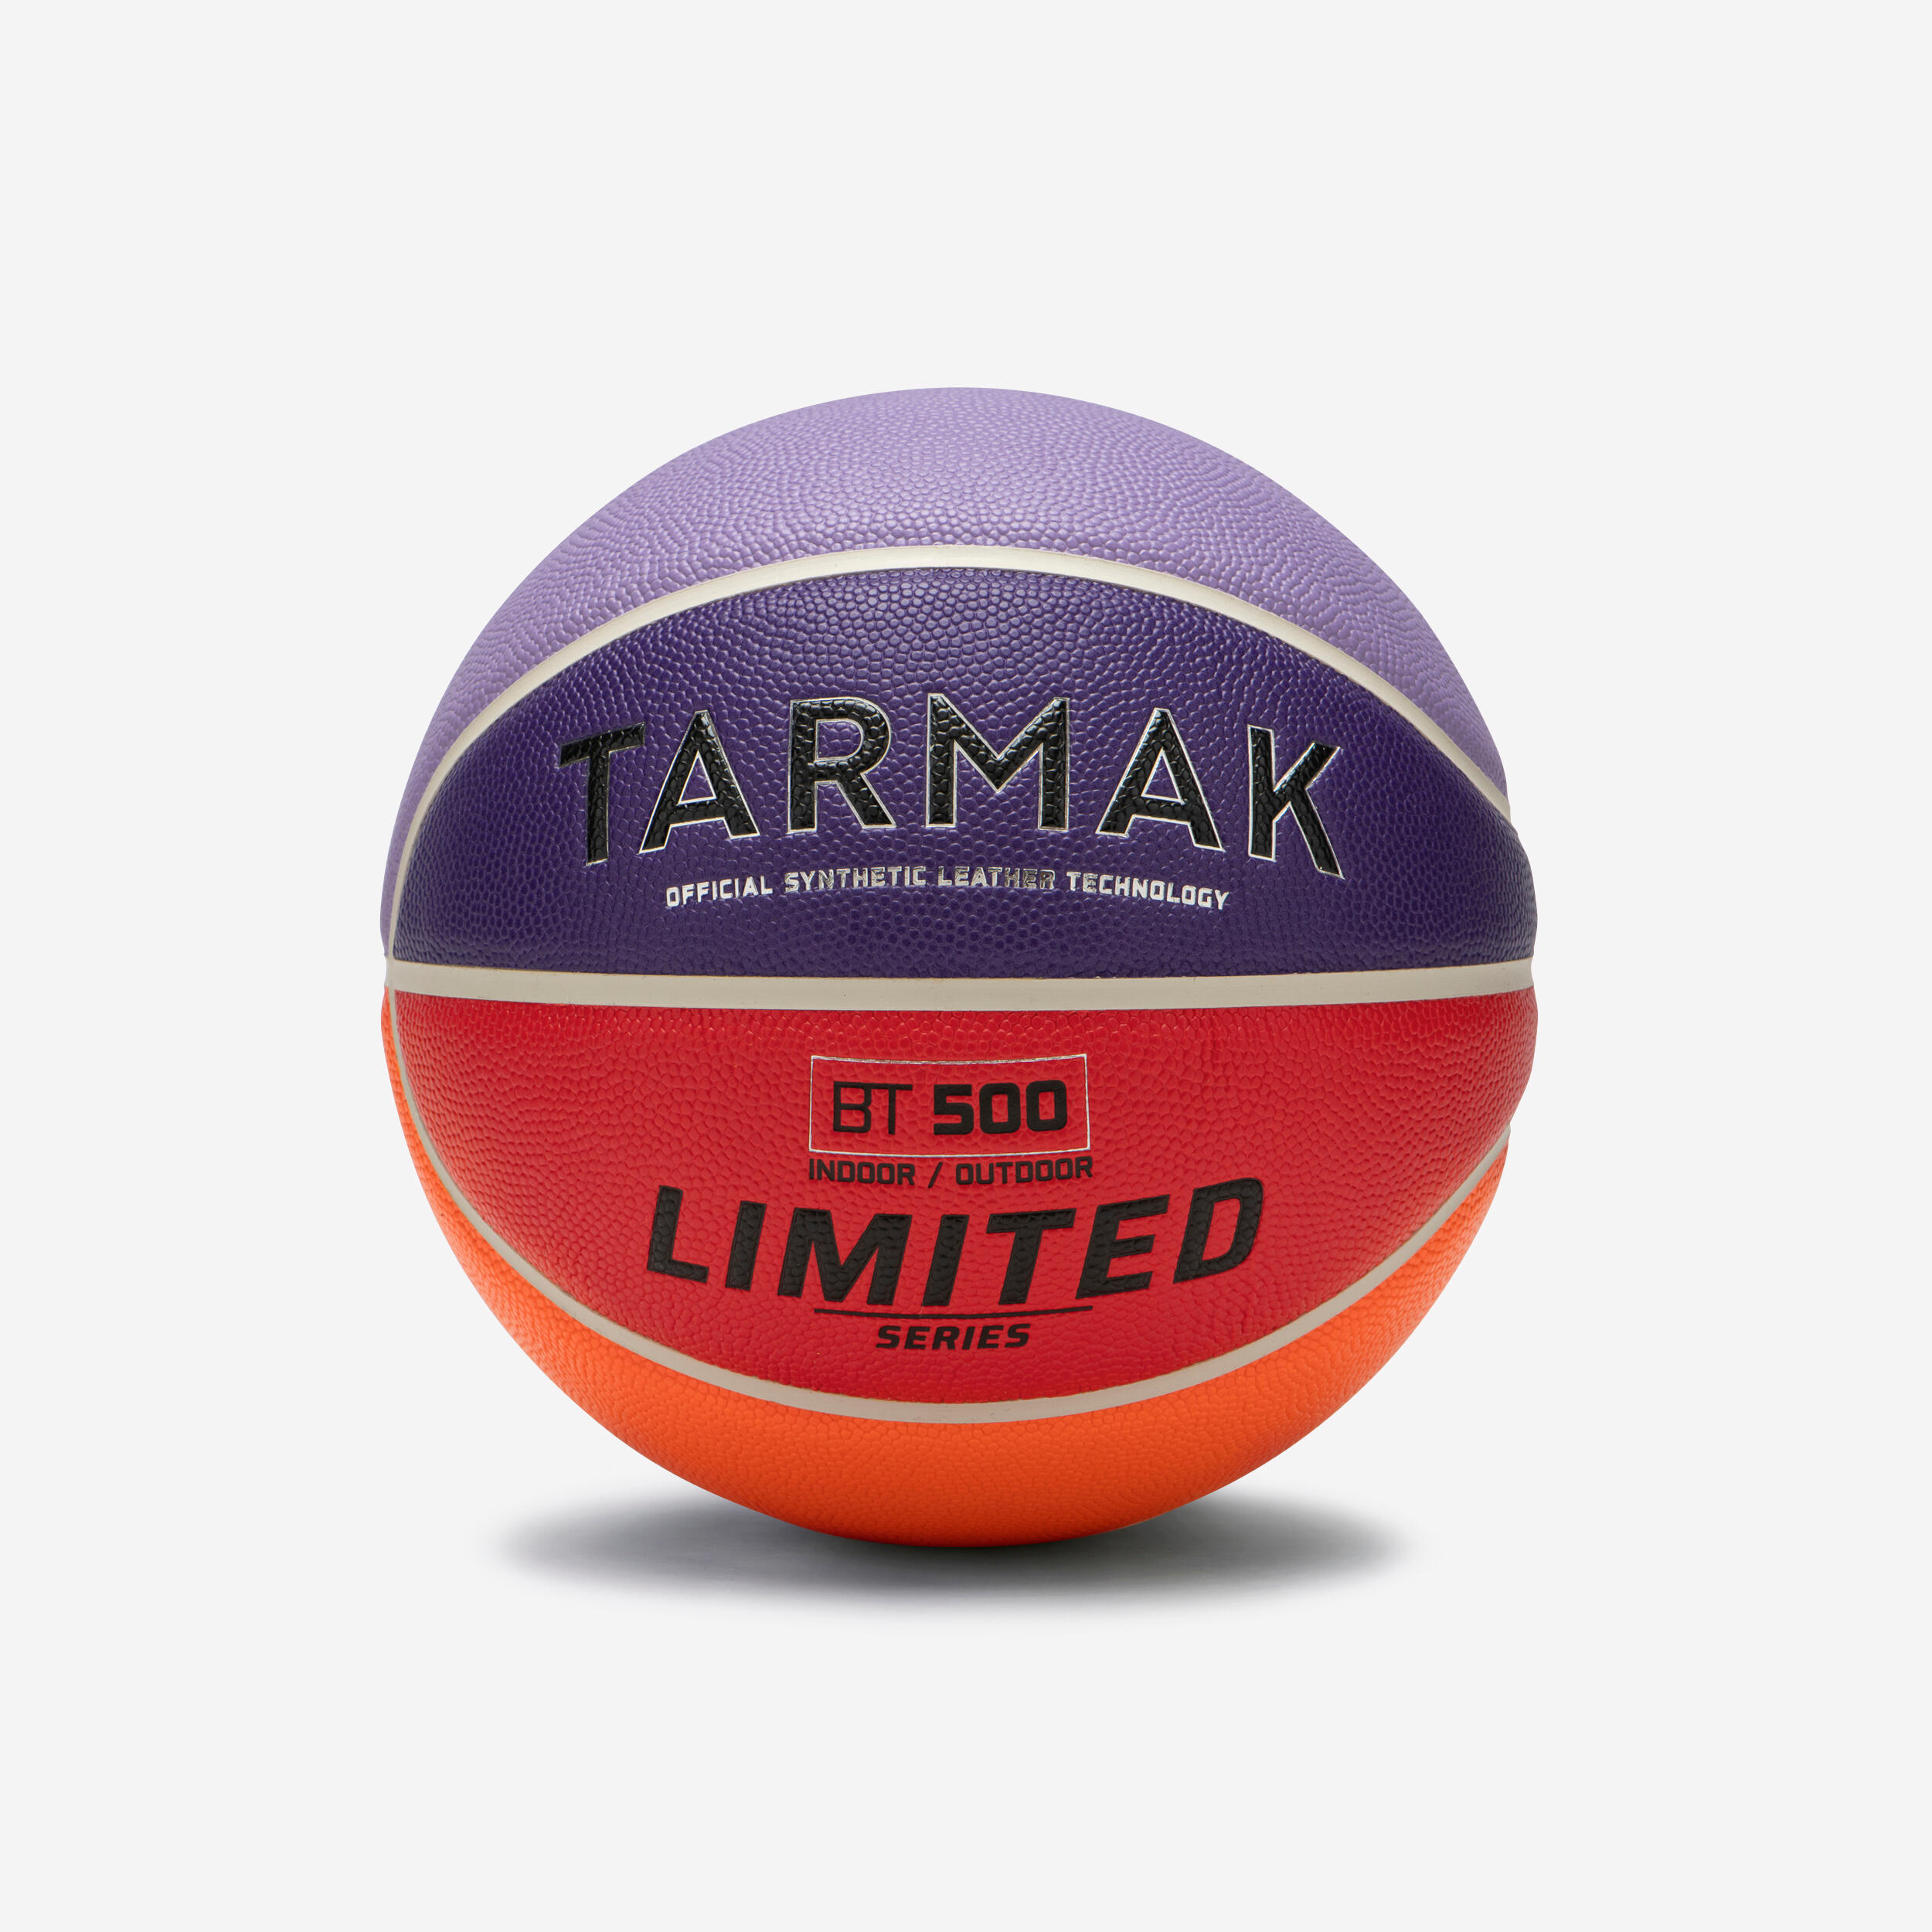 TARMAK Ballon De Basketball Limited Edition Taille 6 - Bt500 Touch Violet Rouge